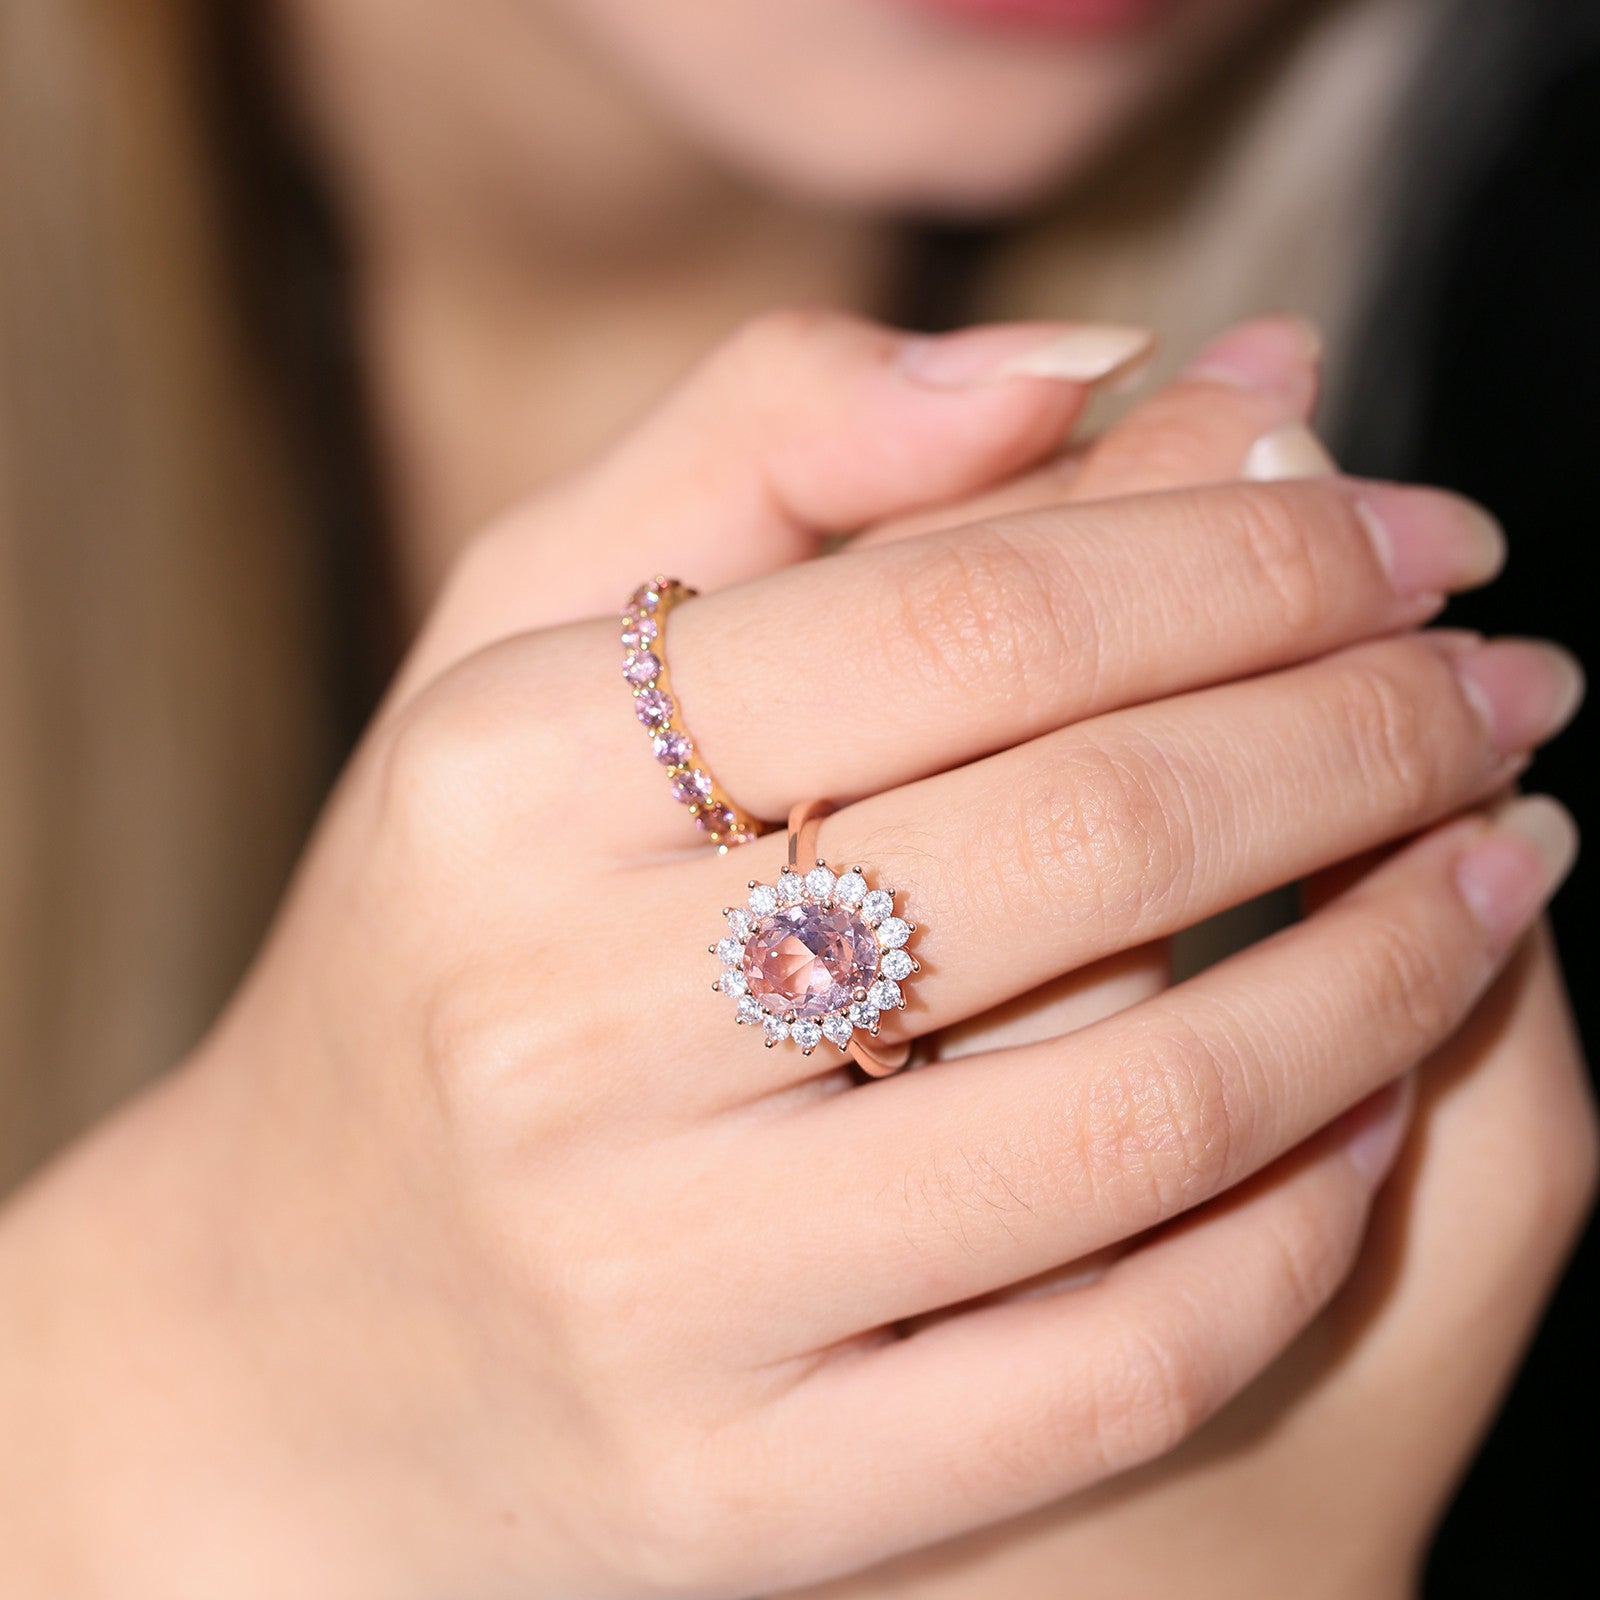 Our Lady Diana Ring - Mardon Jewelers Blog - Custom Jewelry and Gem  Industry News Mardon Jewelers Blog – Custom Jewelry and Gem Industry News  Blog Archive